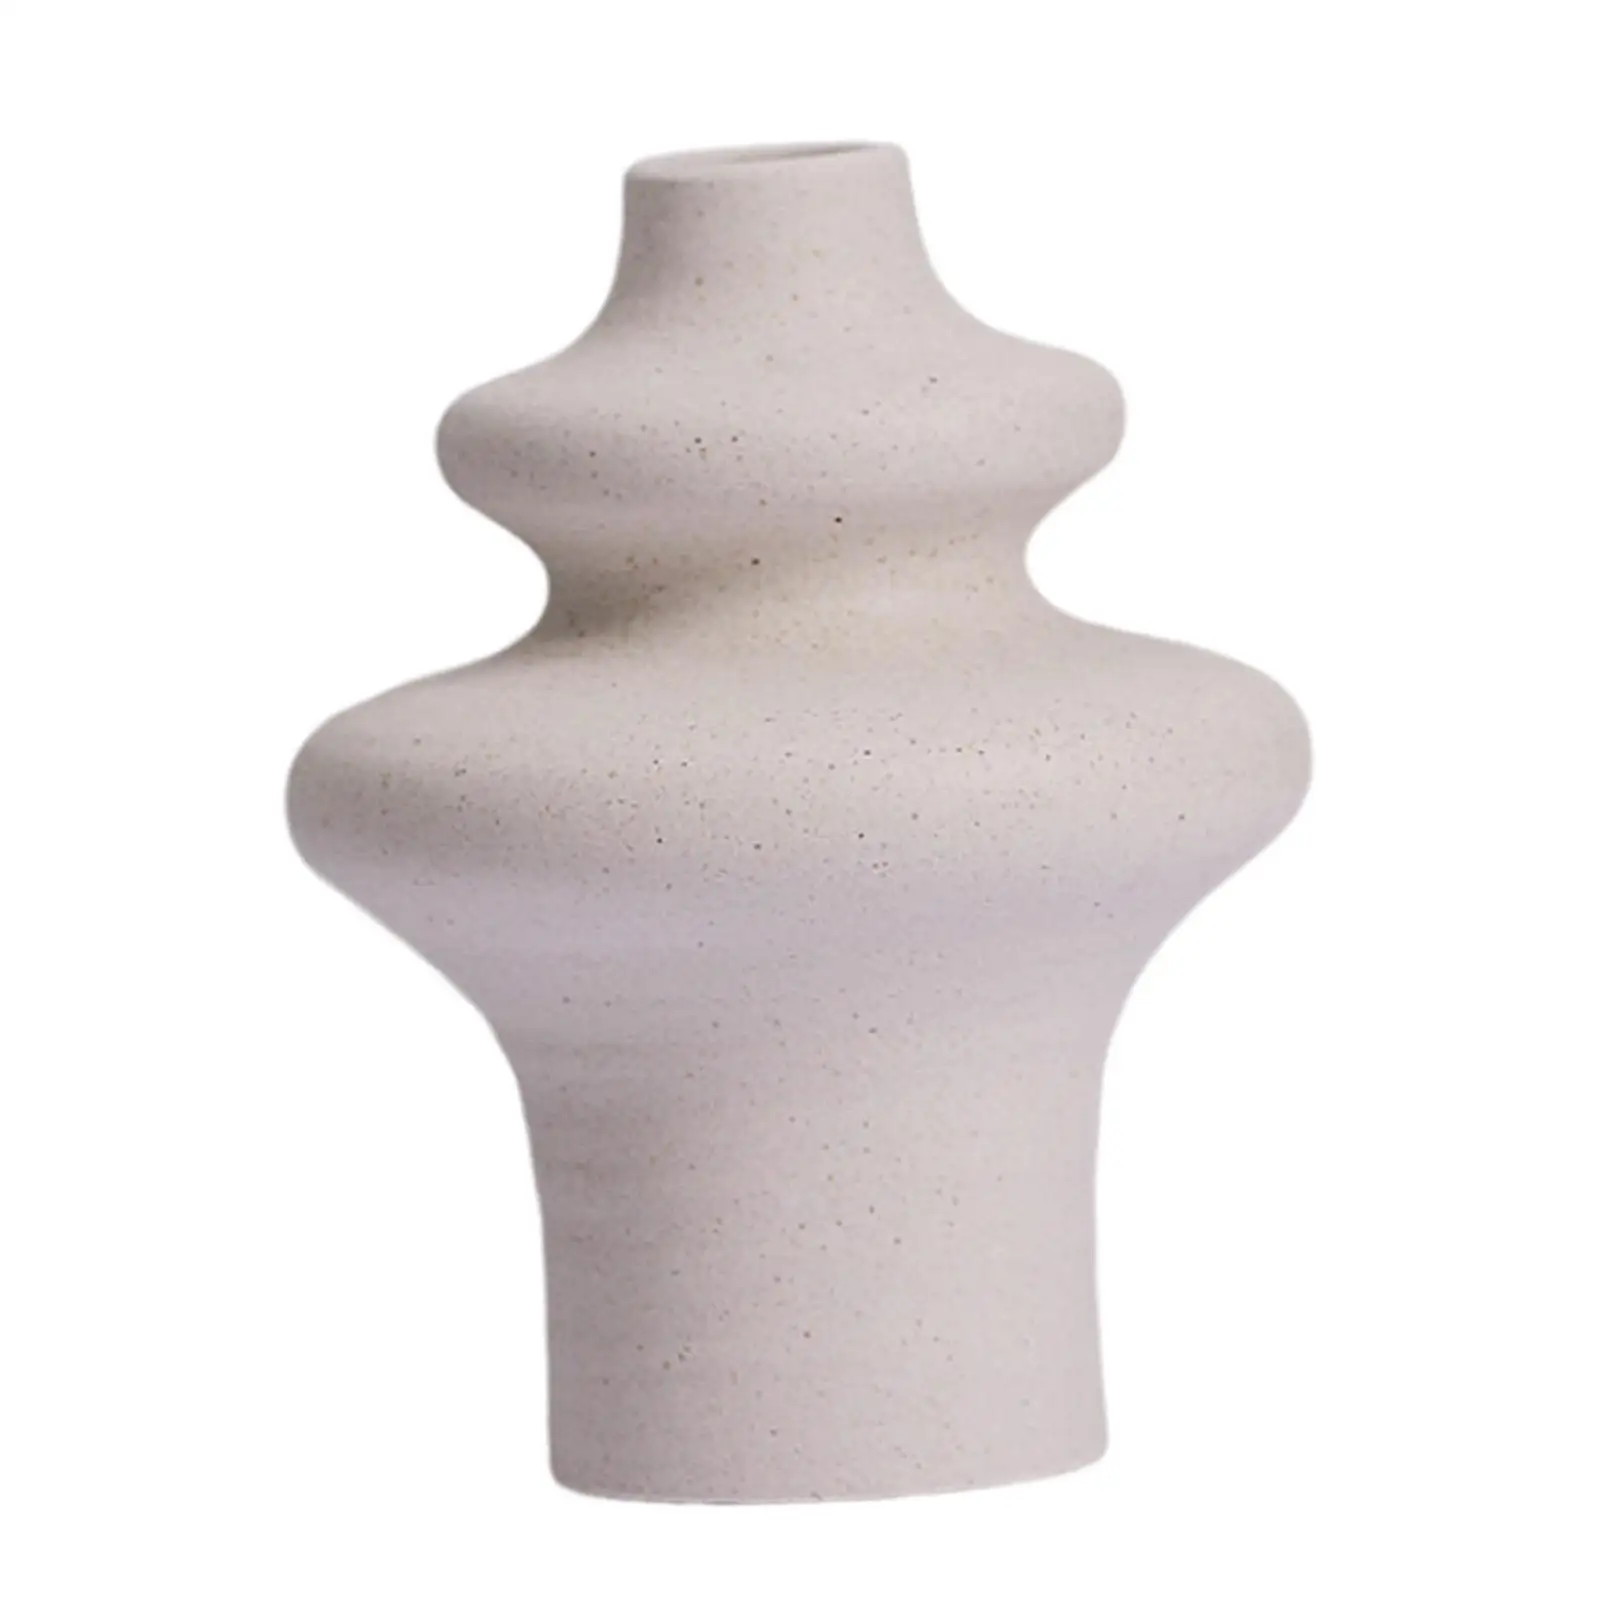 Ceramic Frosted Vase Flower Pot Stylish Flower Arrangement Container